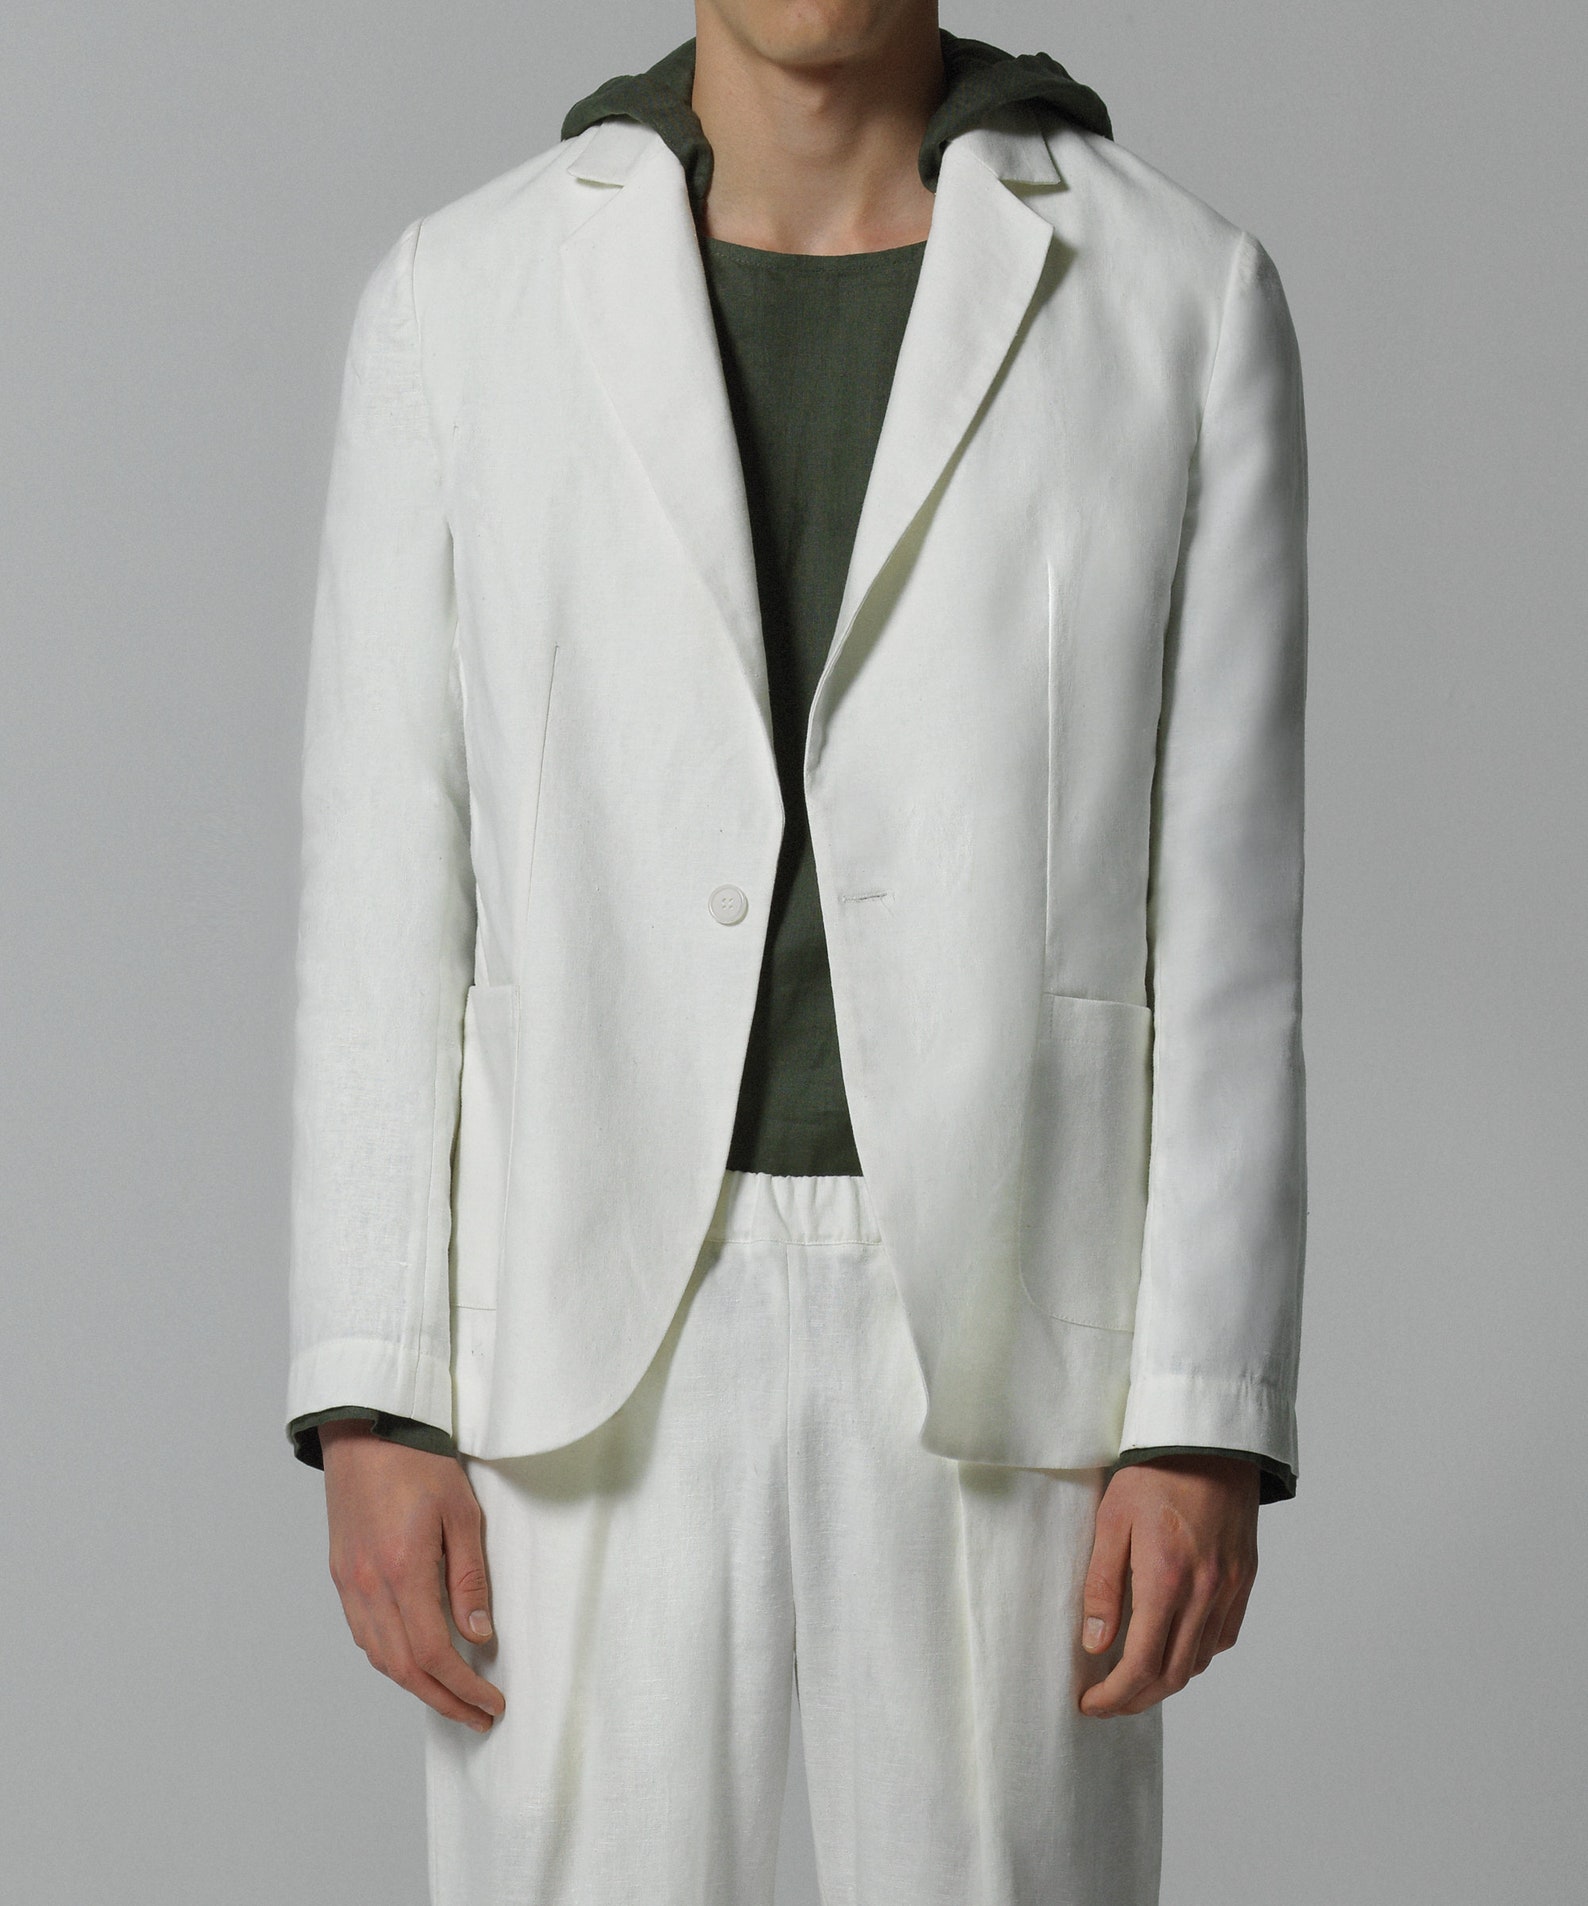 Linen Men's Blazer Jacket Slim Fit - Etsy